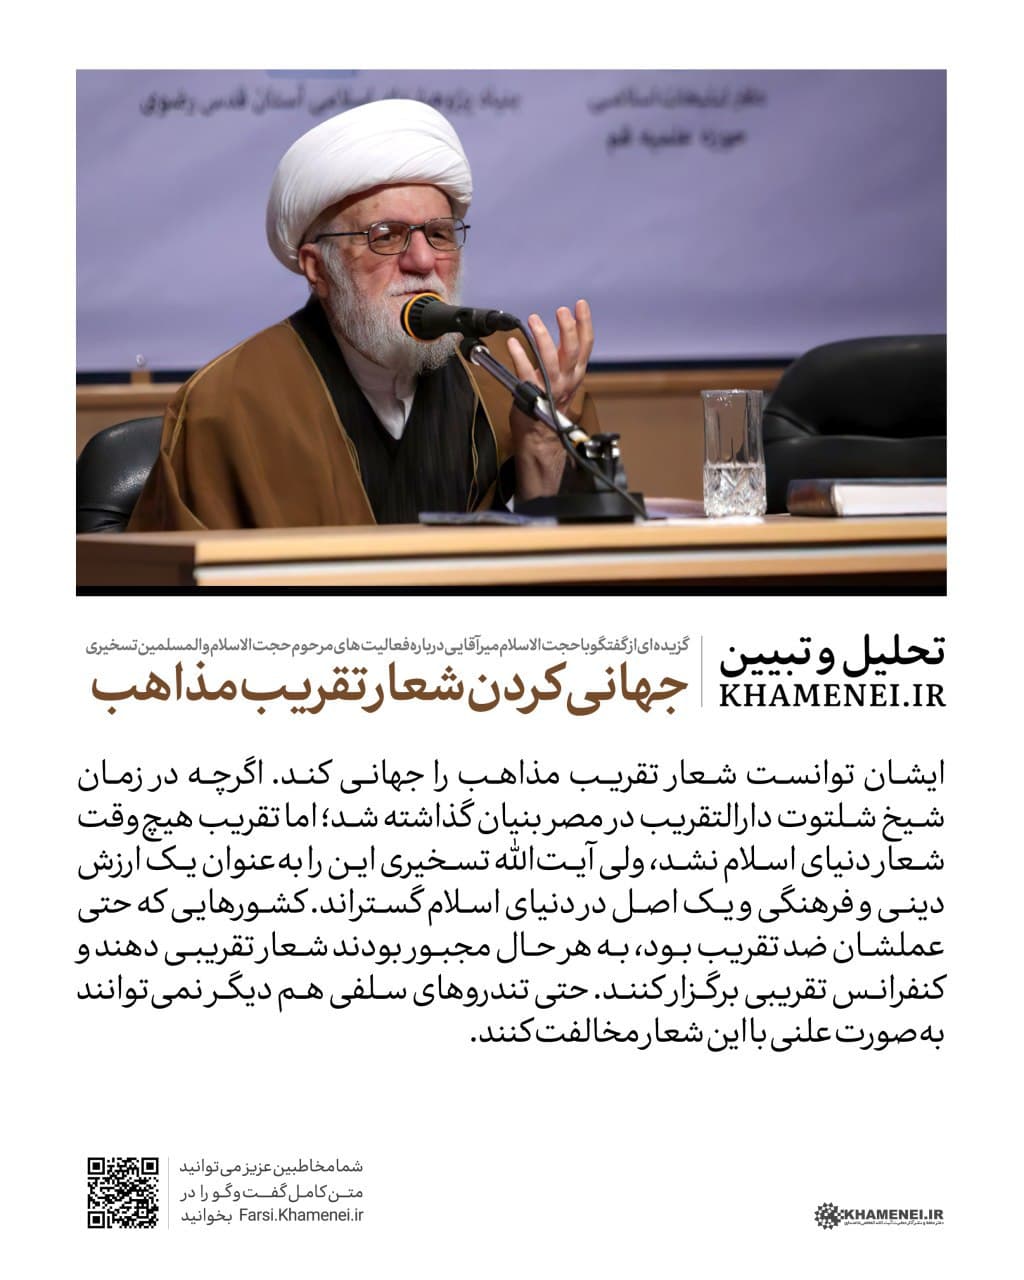 https://idc0-cdn0.khamenei.ir/ndata/news/46582/photo_2020-10-03_16-26-53.jpg